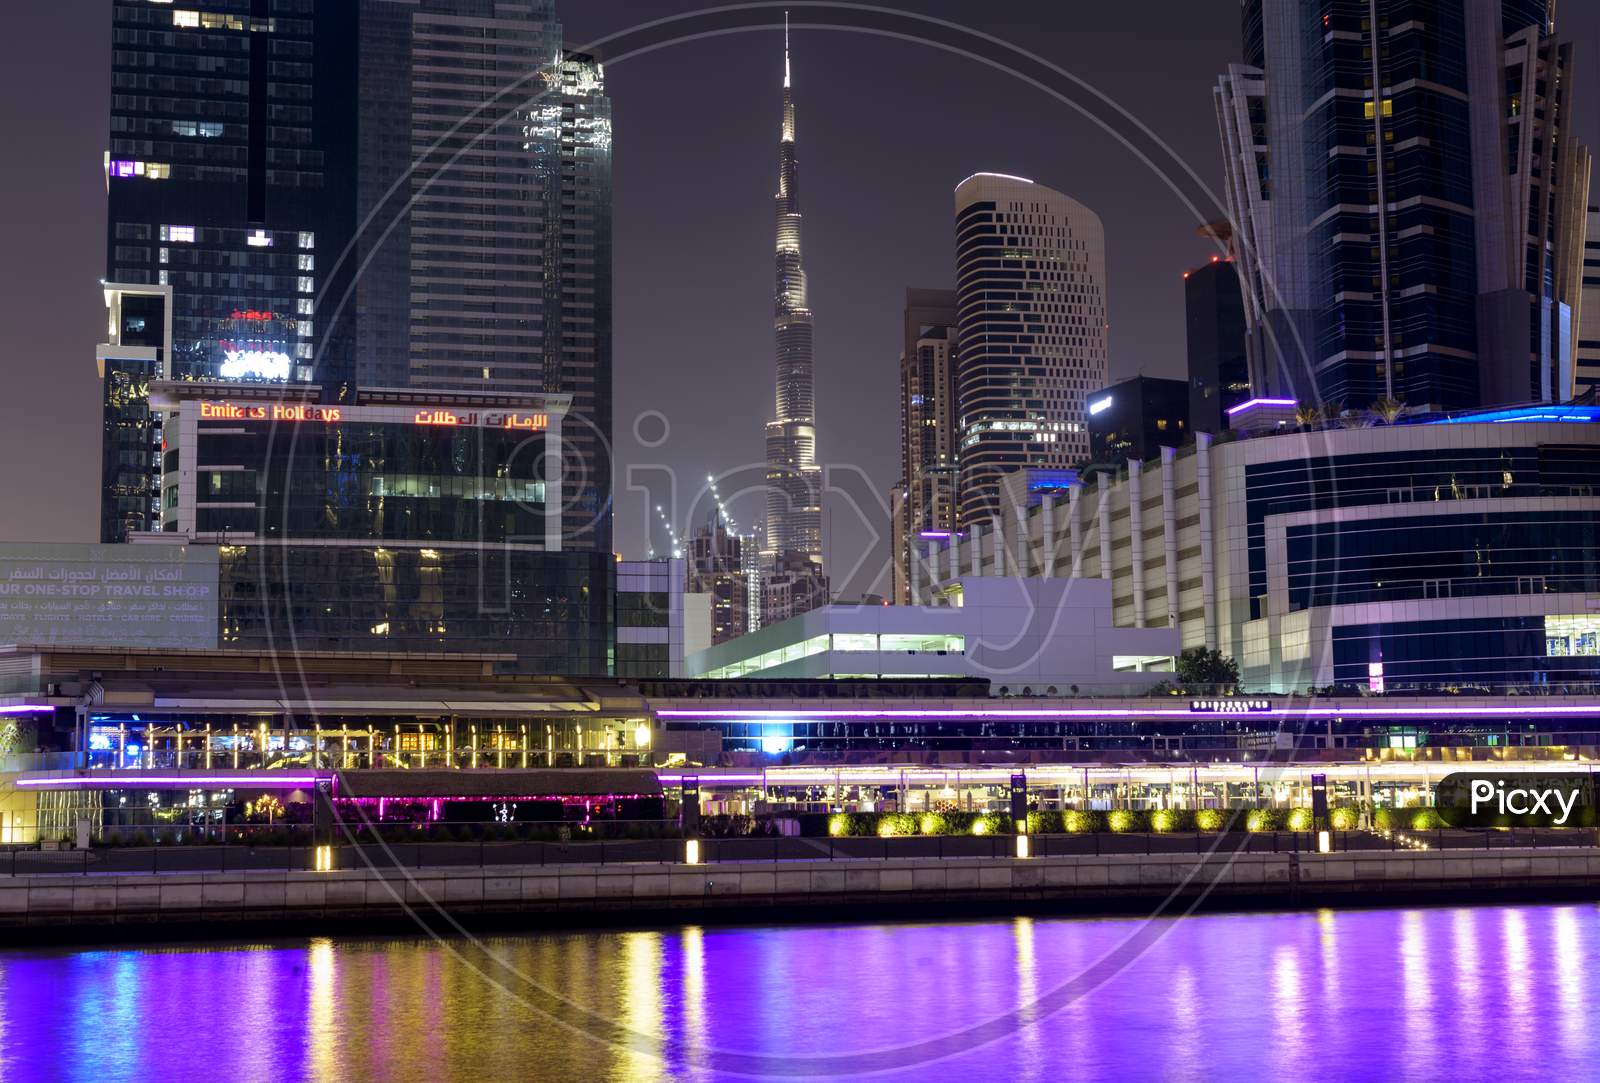 Dubai, Uae 6Th Nov 2020 -View Of The Burj Khalifa Surrounded With Buildings And Hotels Facing The Colorful Illuminated Dubai Canal Boardwalk Waterfall In Dubai,United Arab Emirates, Middle East